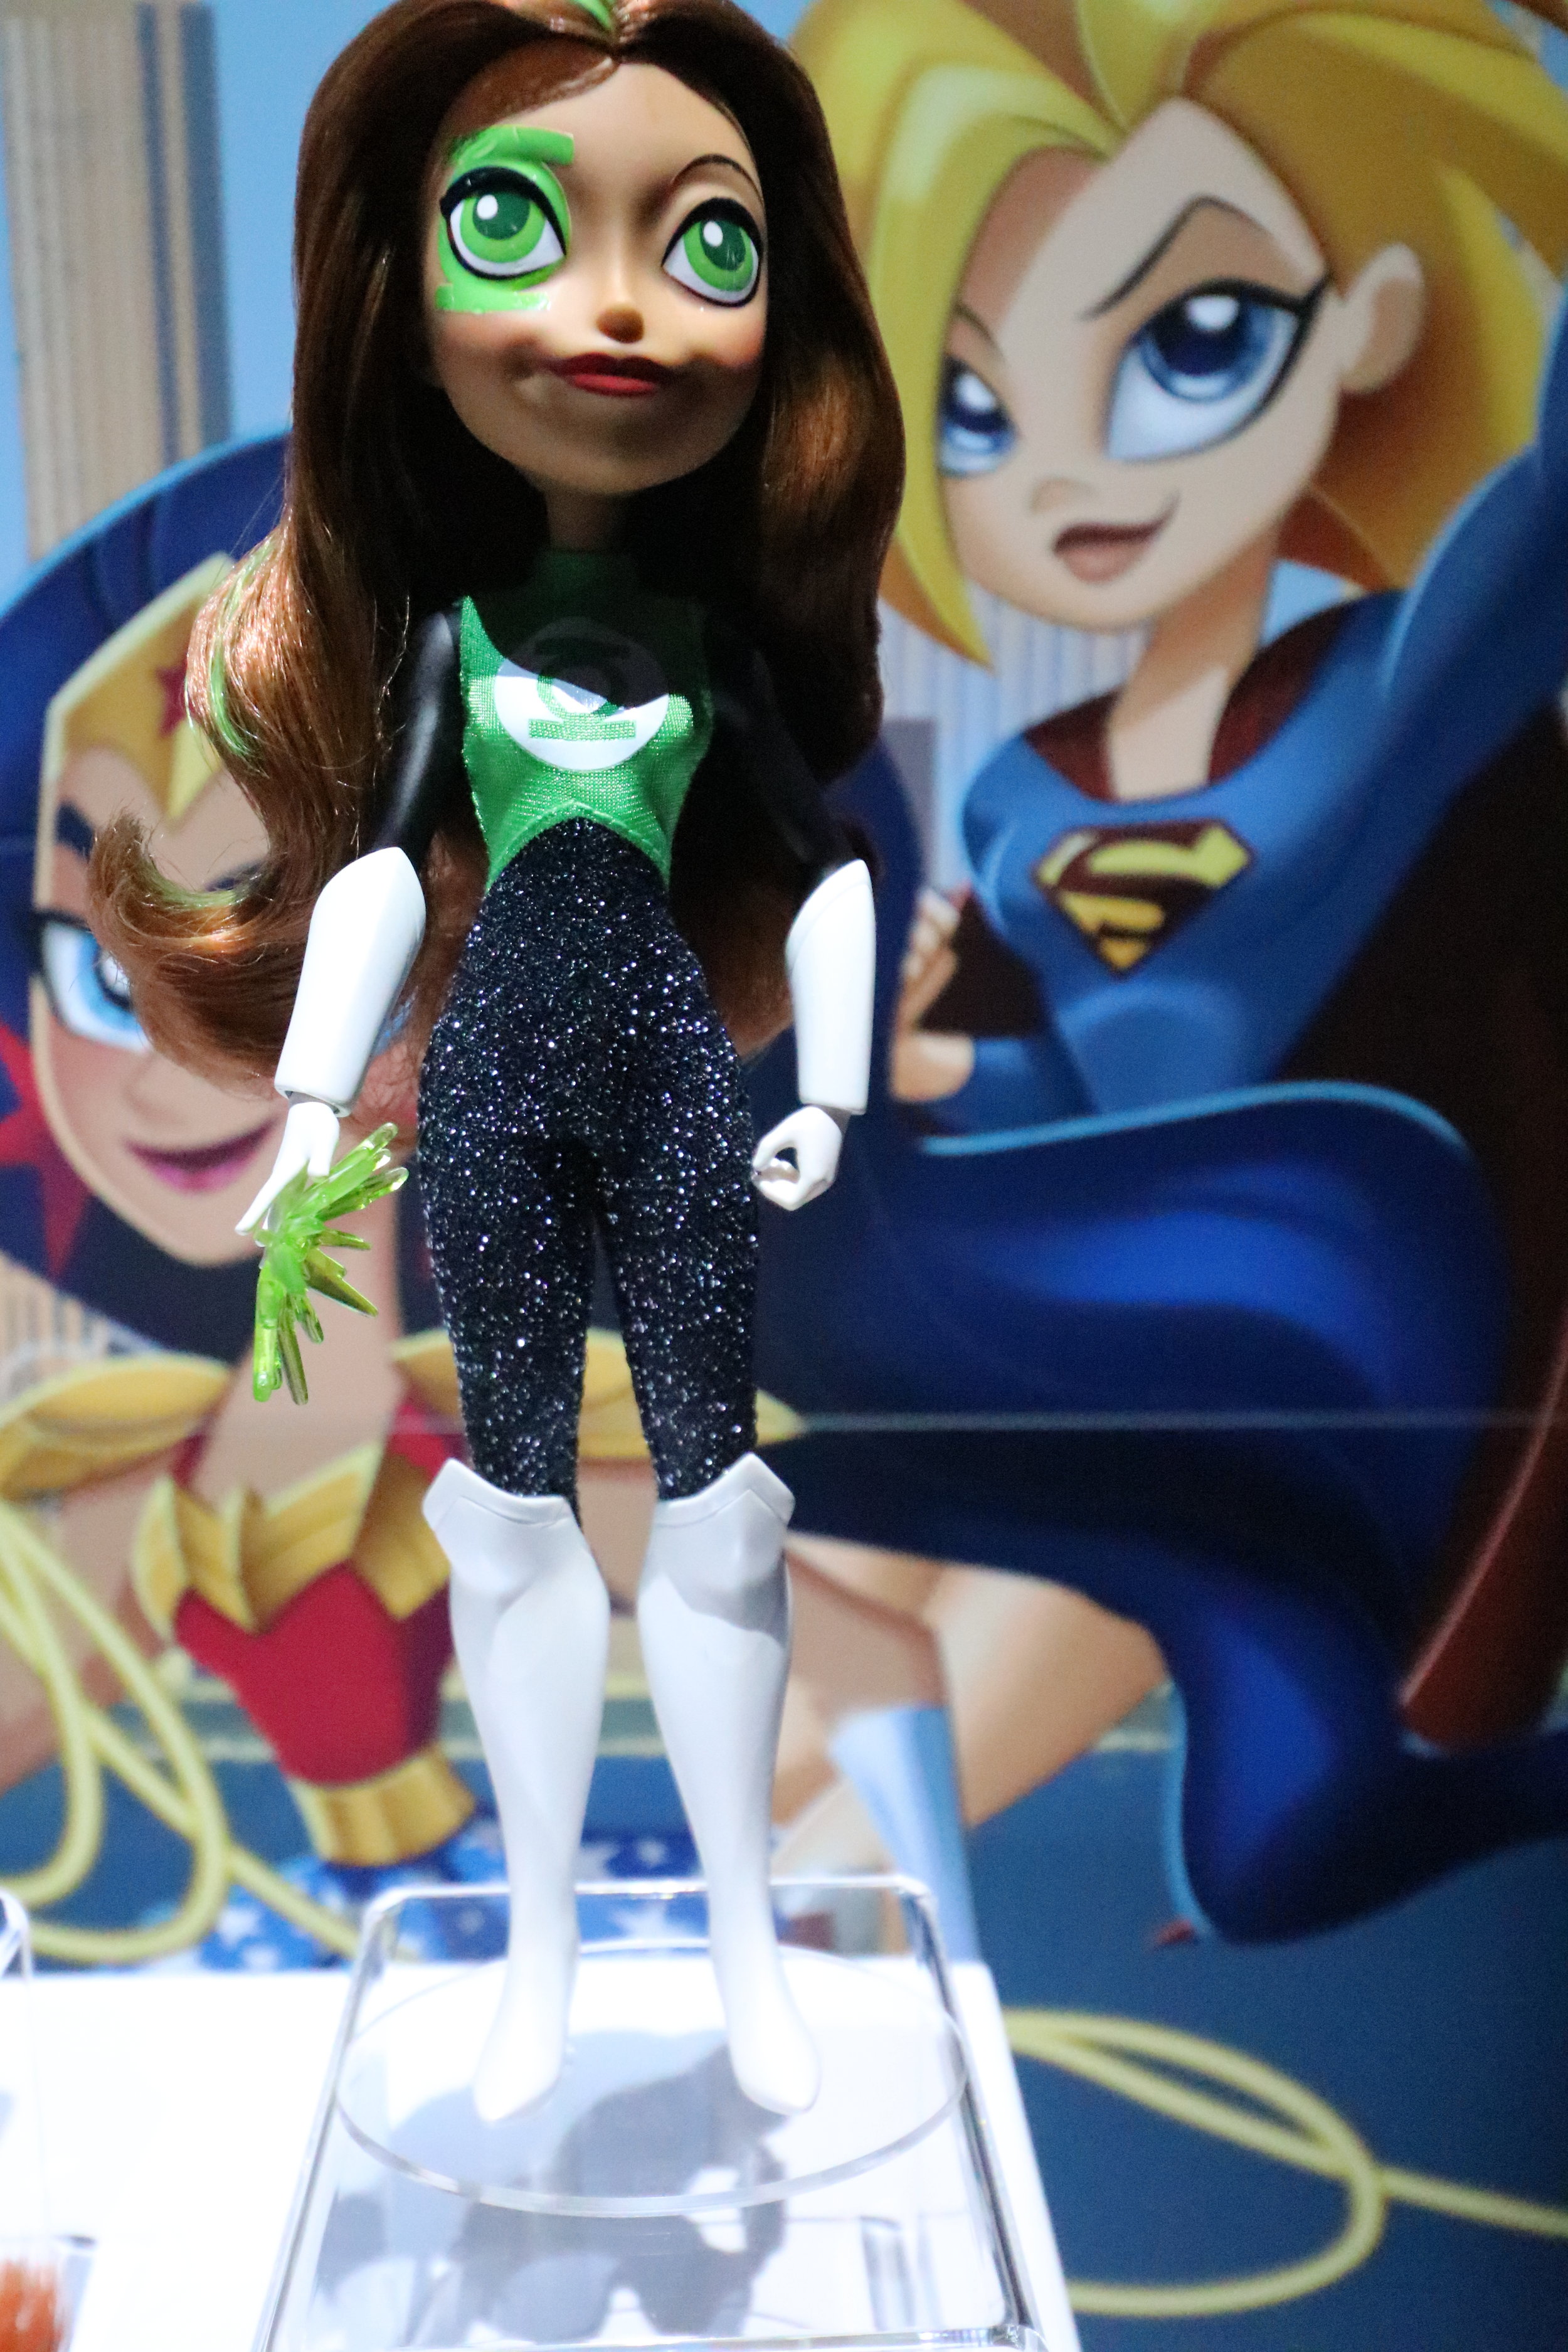 girl superhero dolls